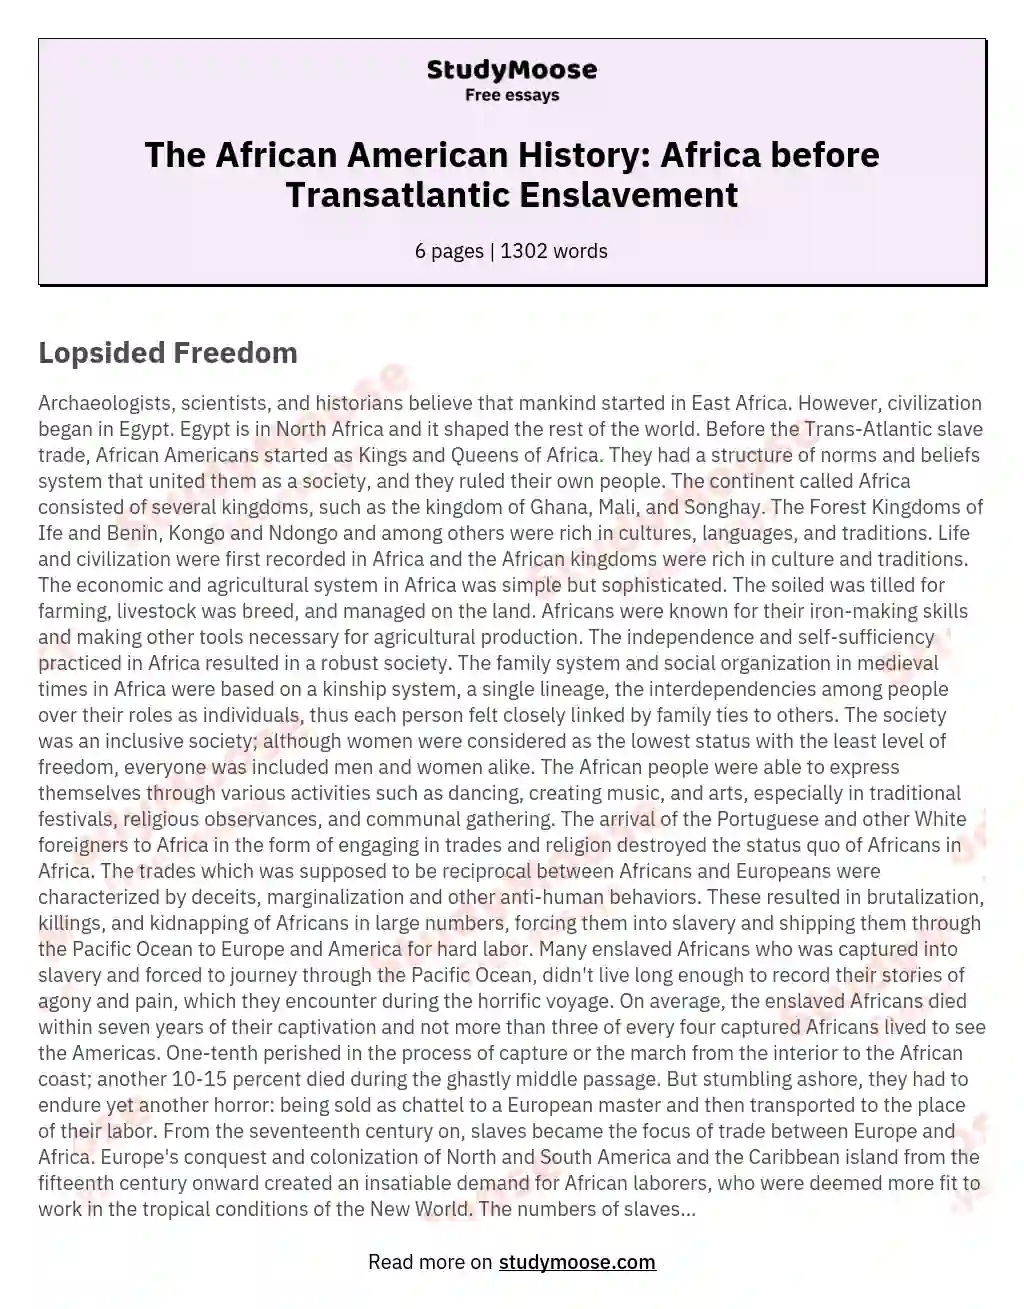 The African American History: Africa before Transatlantic Enslavement